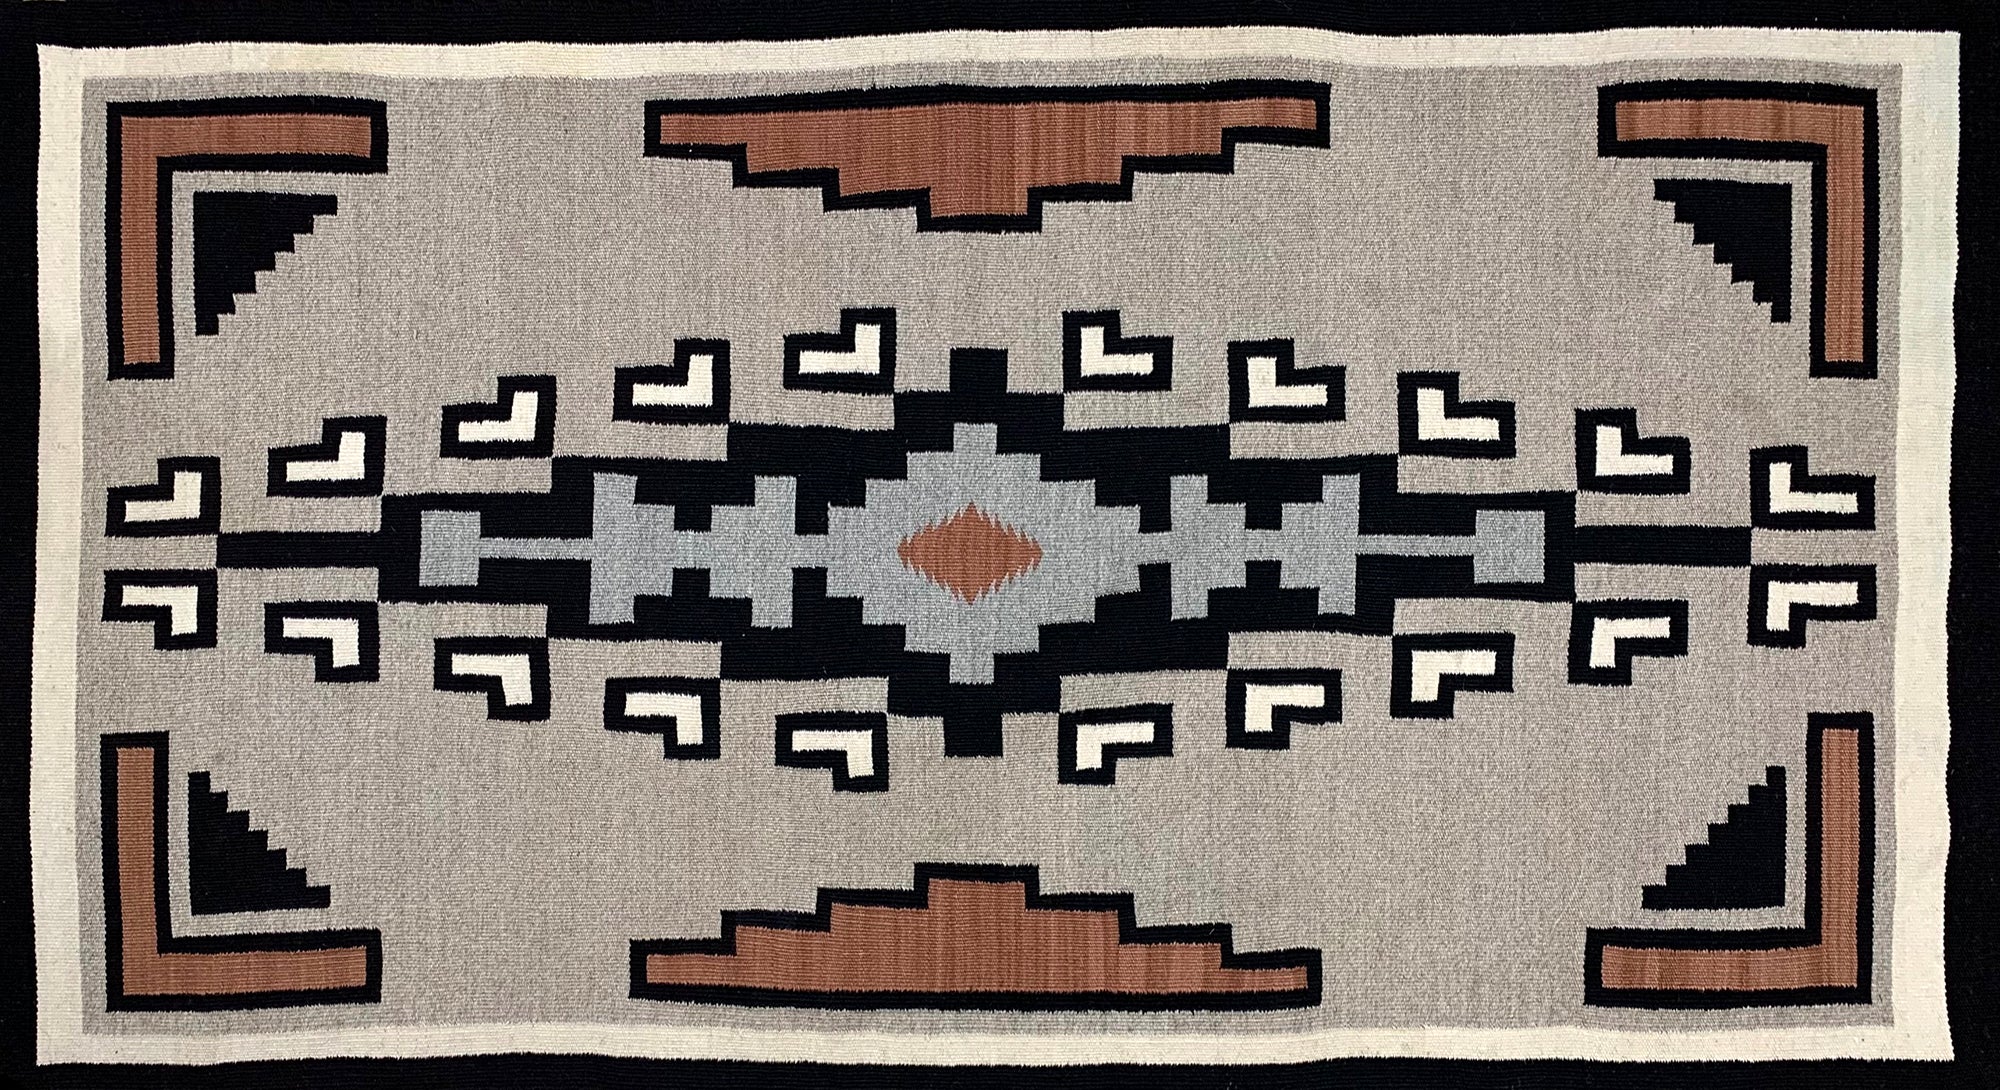 The Navajo Rug